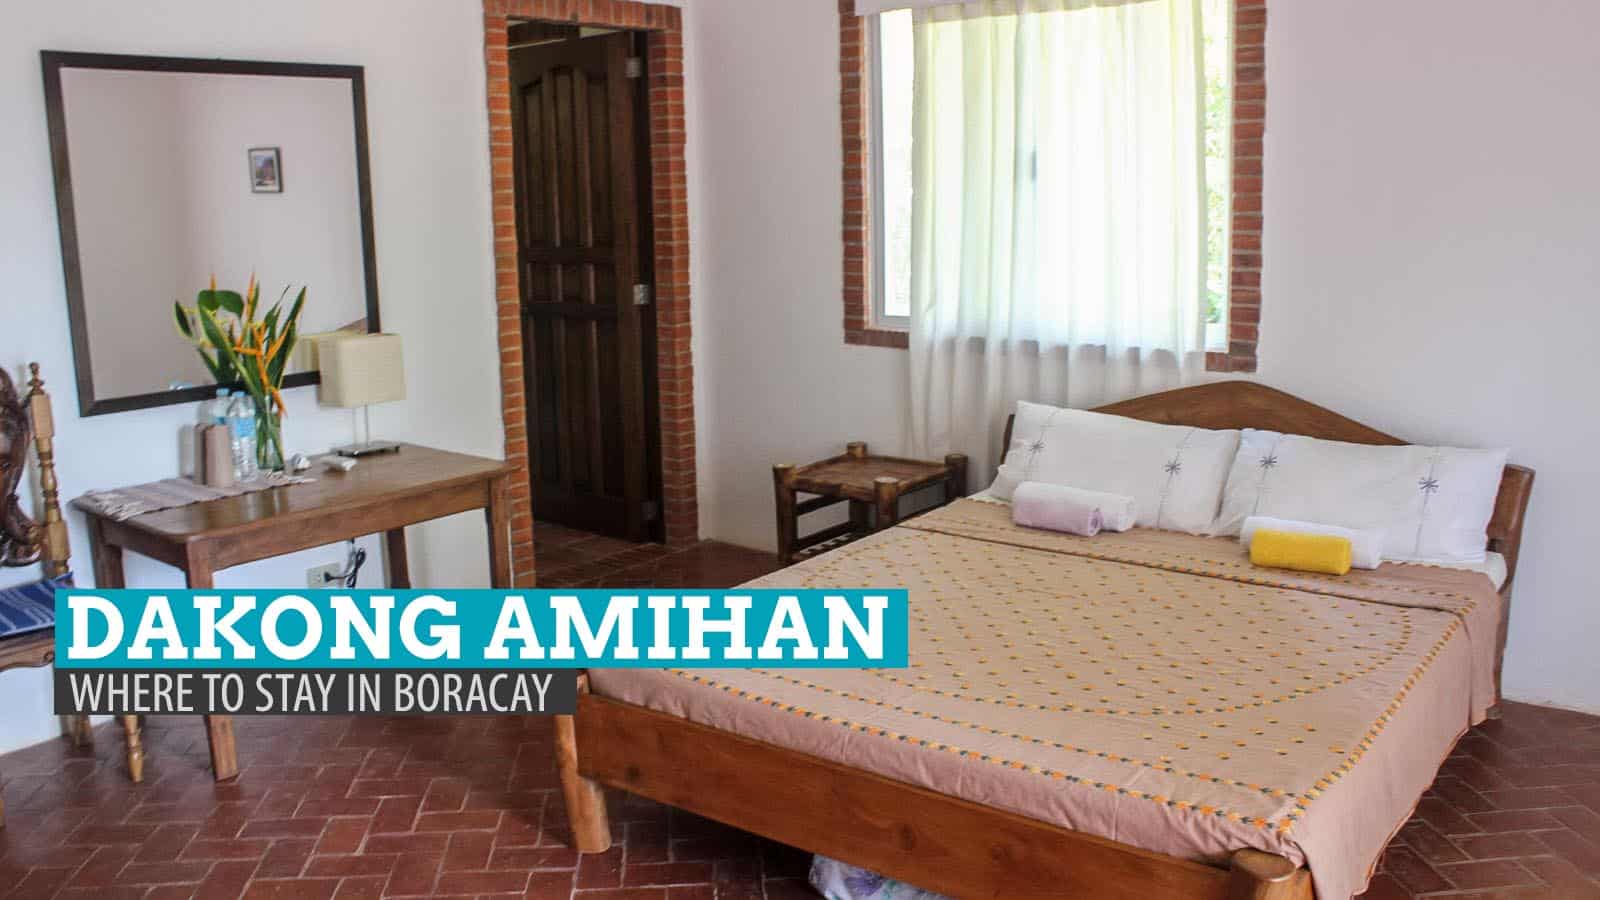 Amihan Home(床和早餐):在菲律宾长滩岛住的地方